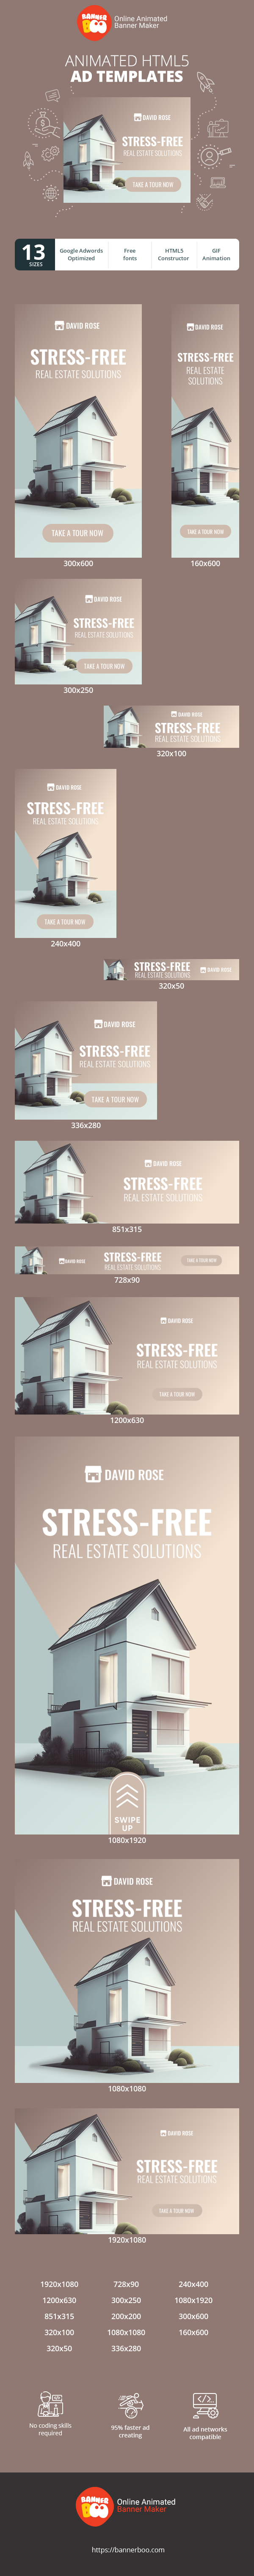 Szablon reklamy banerowej — Stress-free Real Estate Solutions — Real Estate